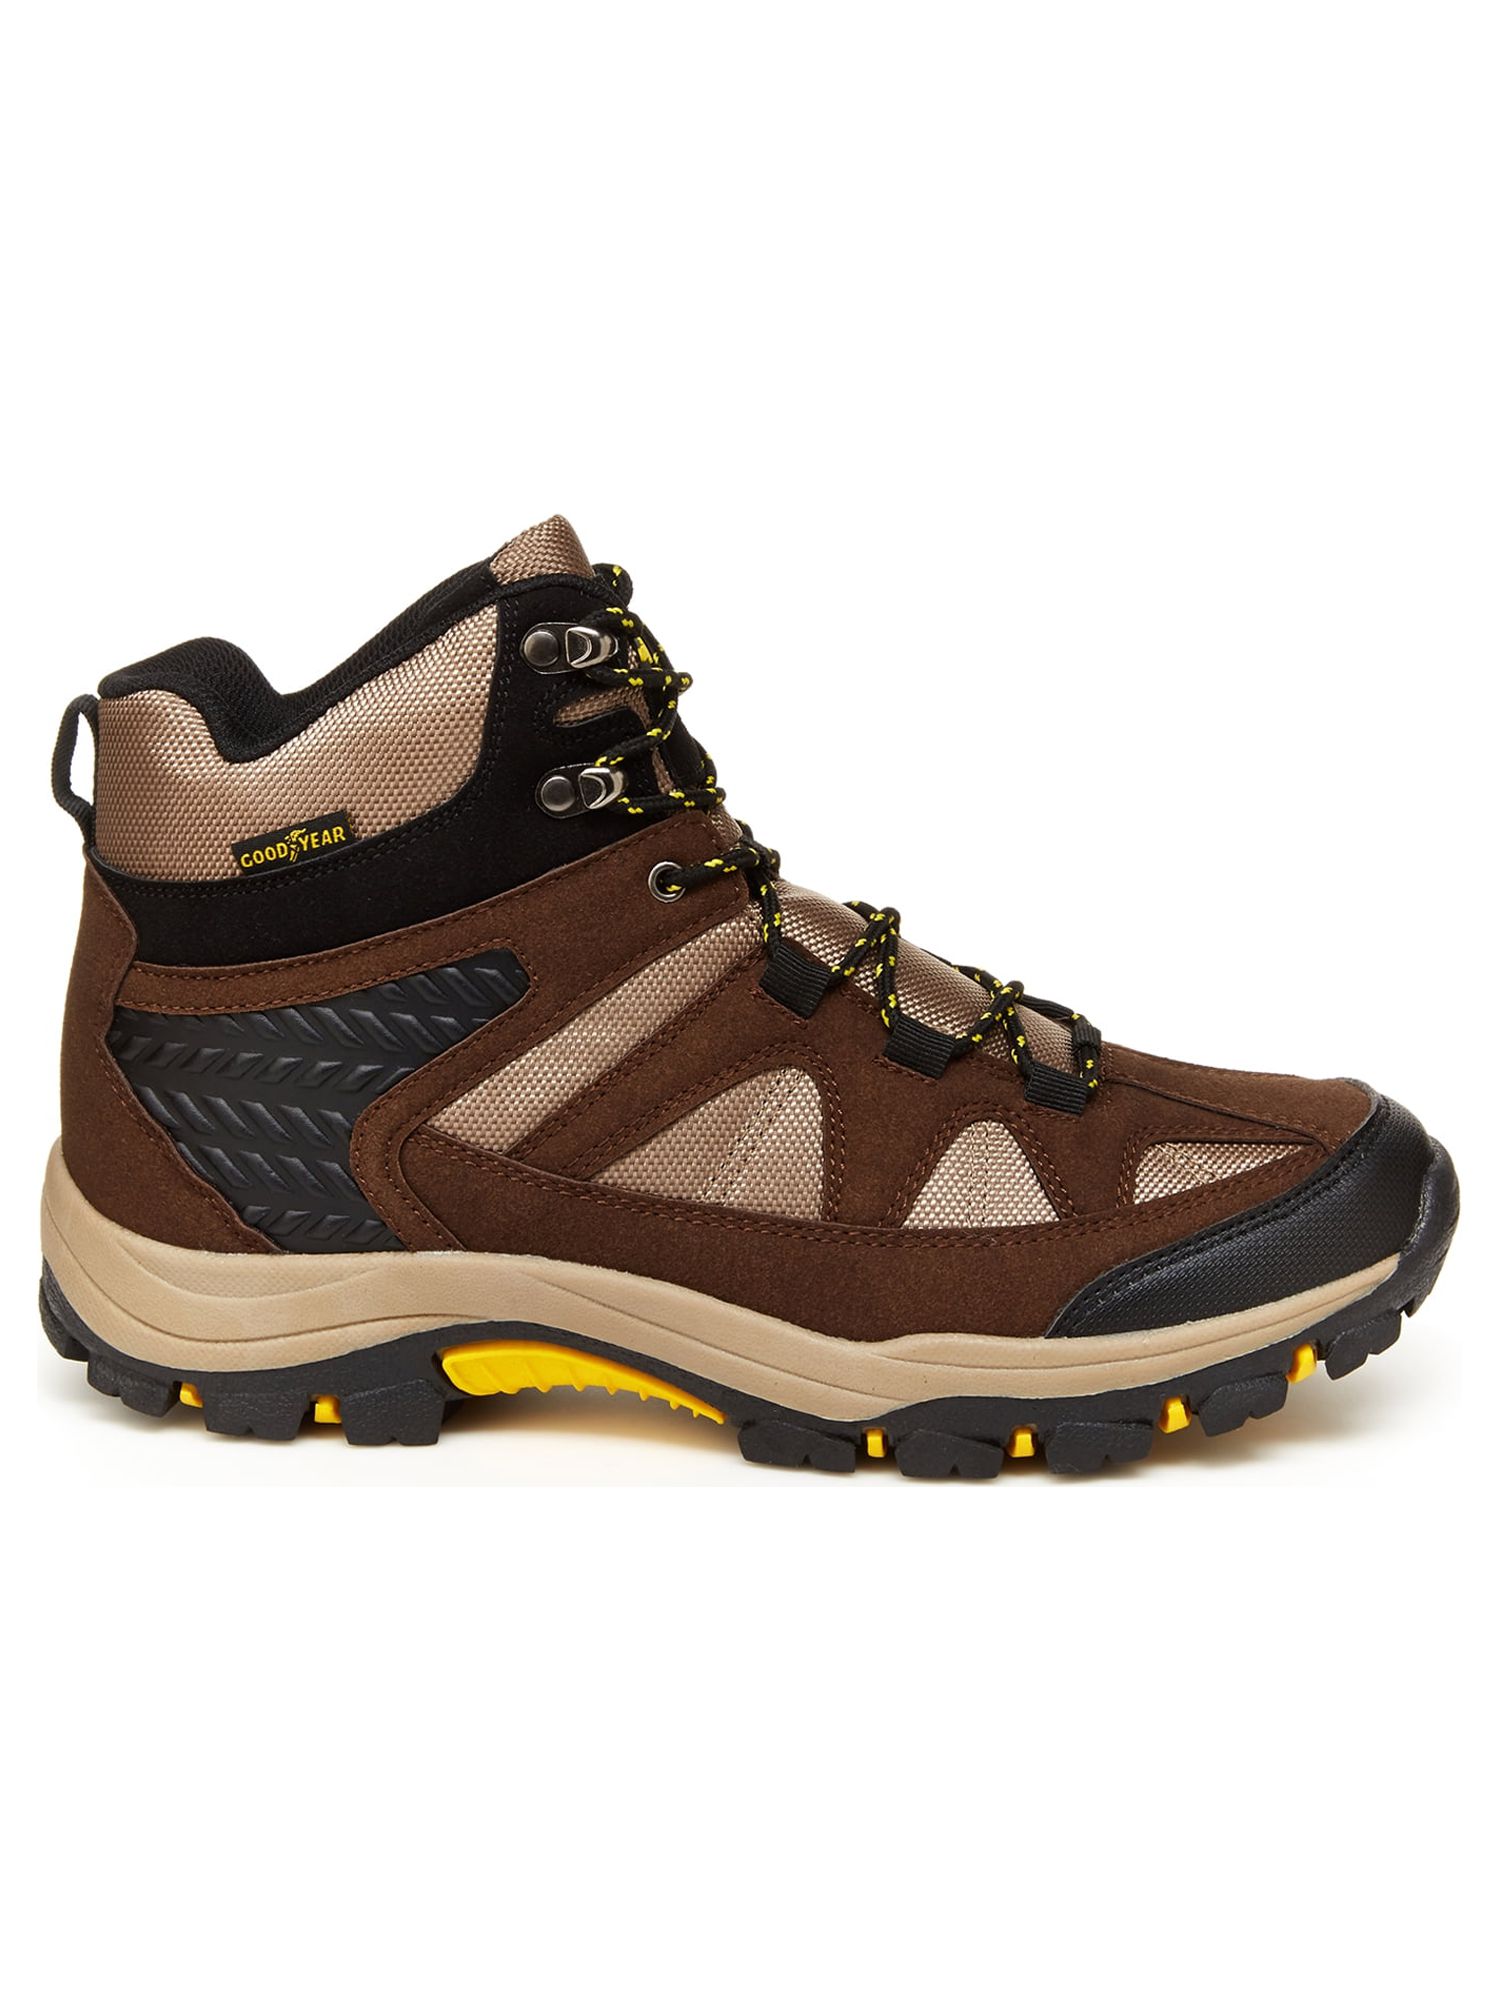 Goodyear Men's Teton Outdoor Hiker Work Boots - image 3 of 6